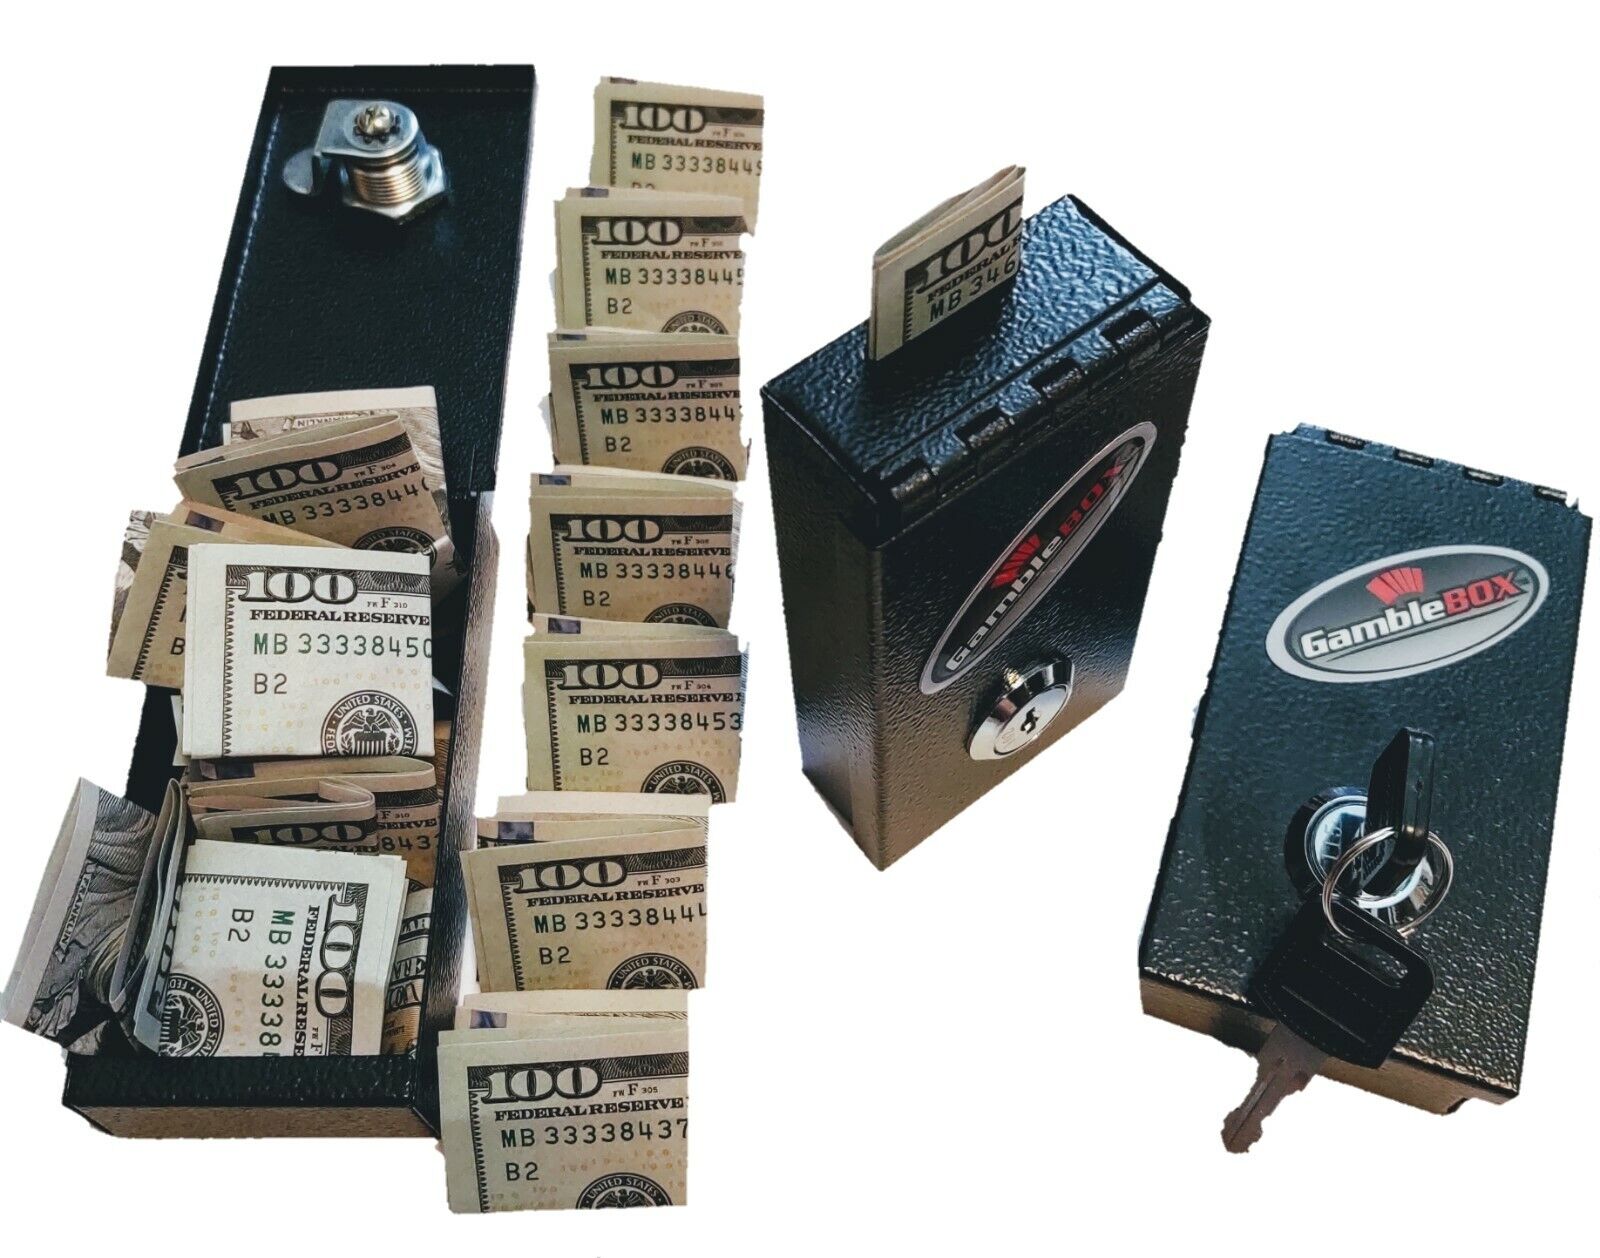 Gambling casino's BINGO POKER LEAVE with CASH in A lockbox POCKET SAFE MONEY BOX